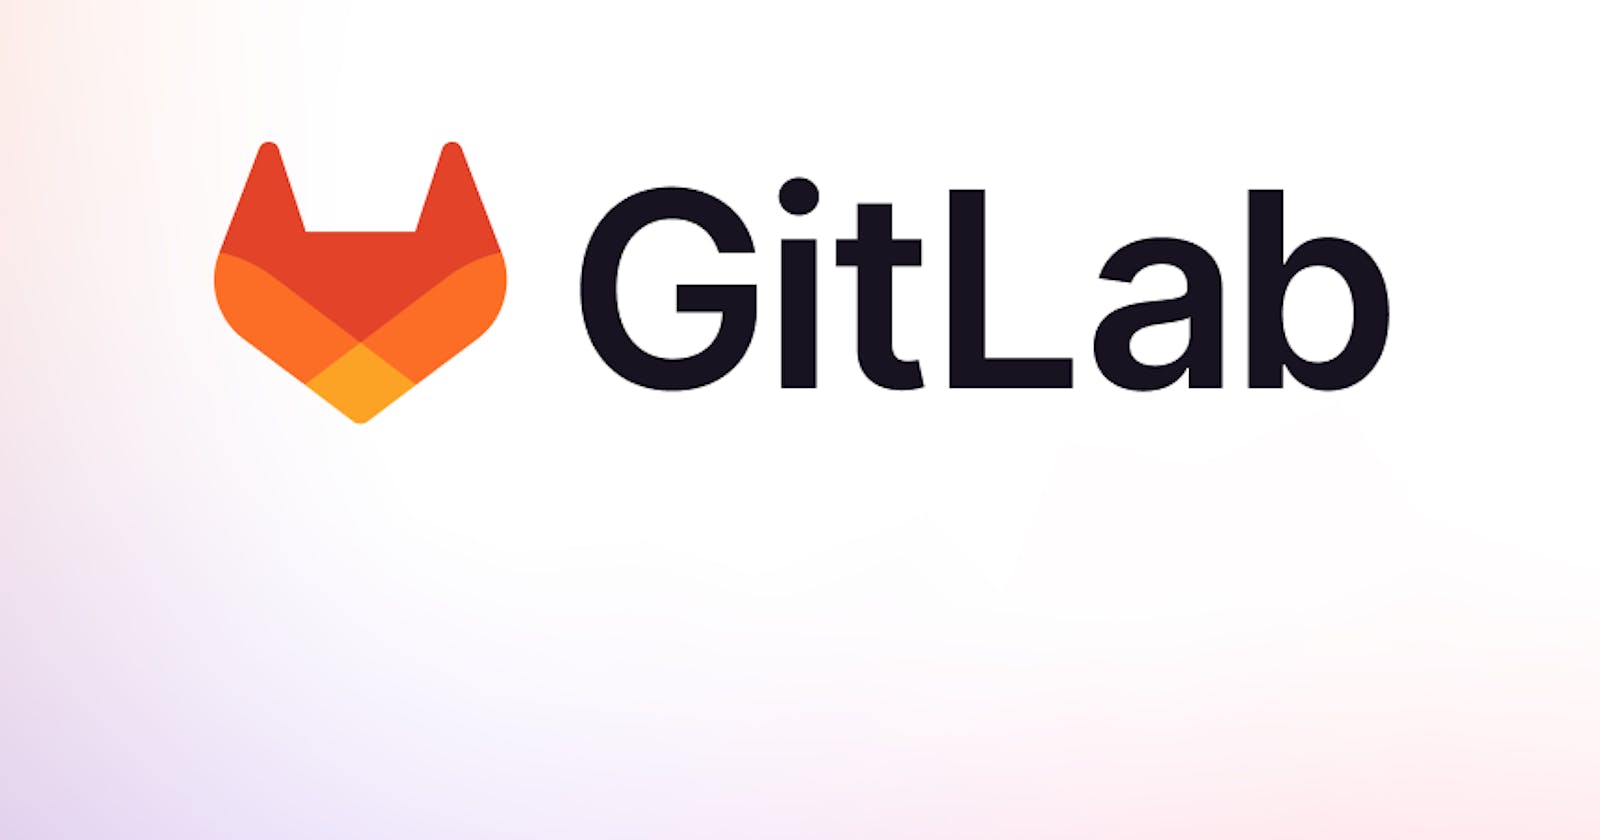 "GitLab: The Swiss Army Knife of Modern Development"